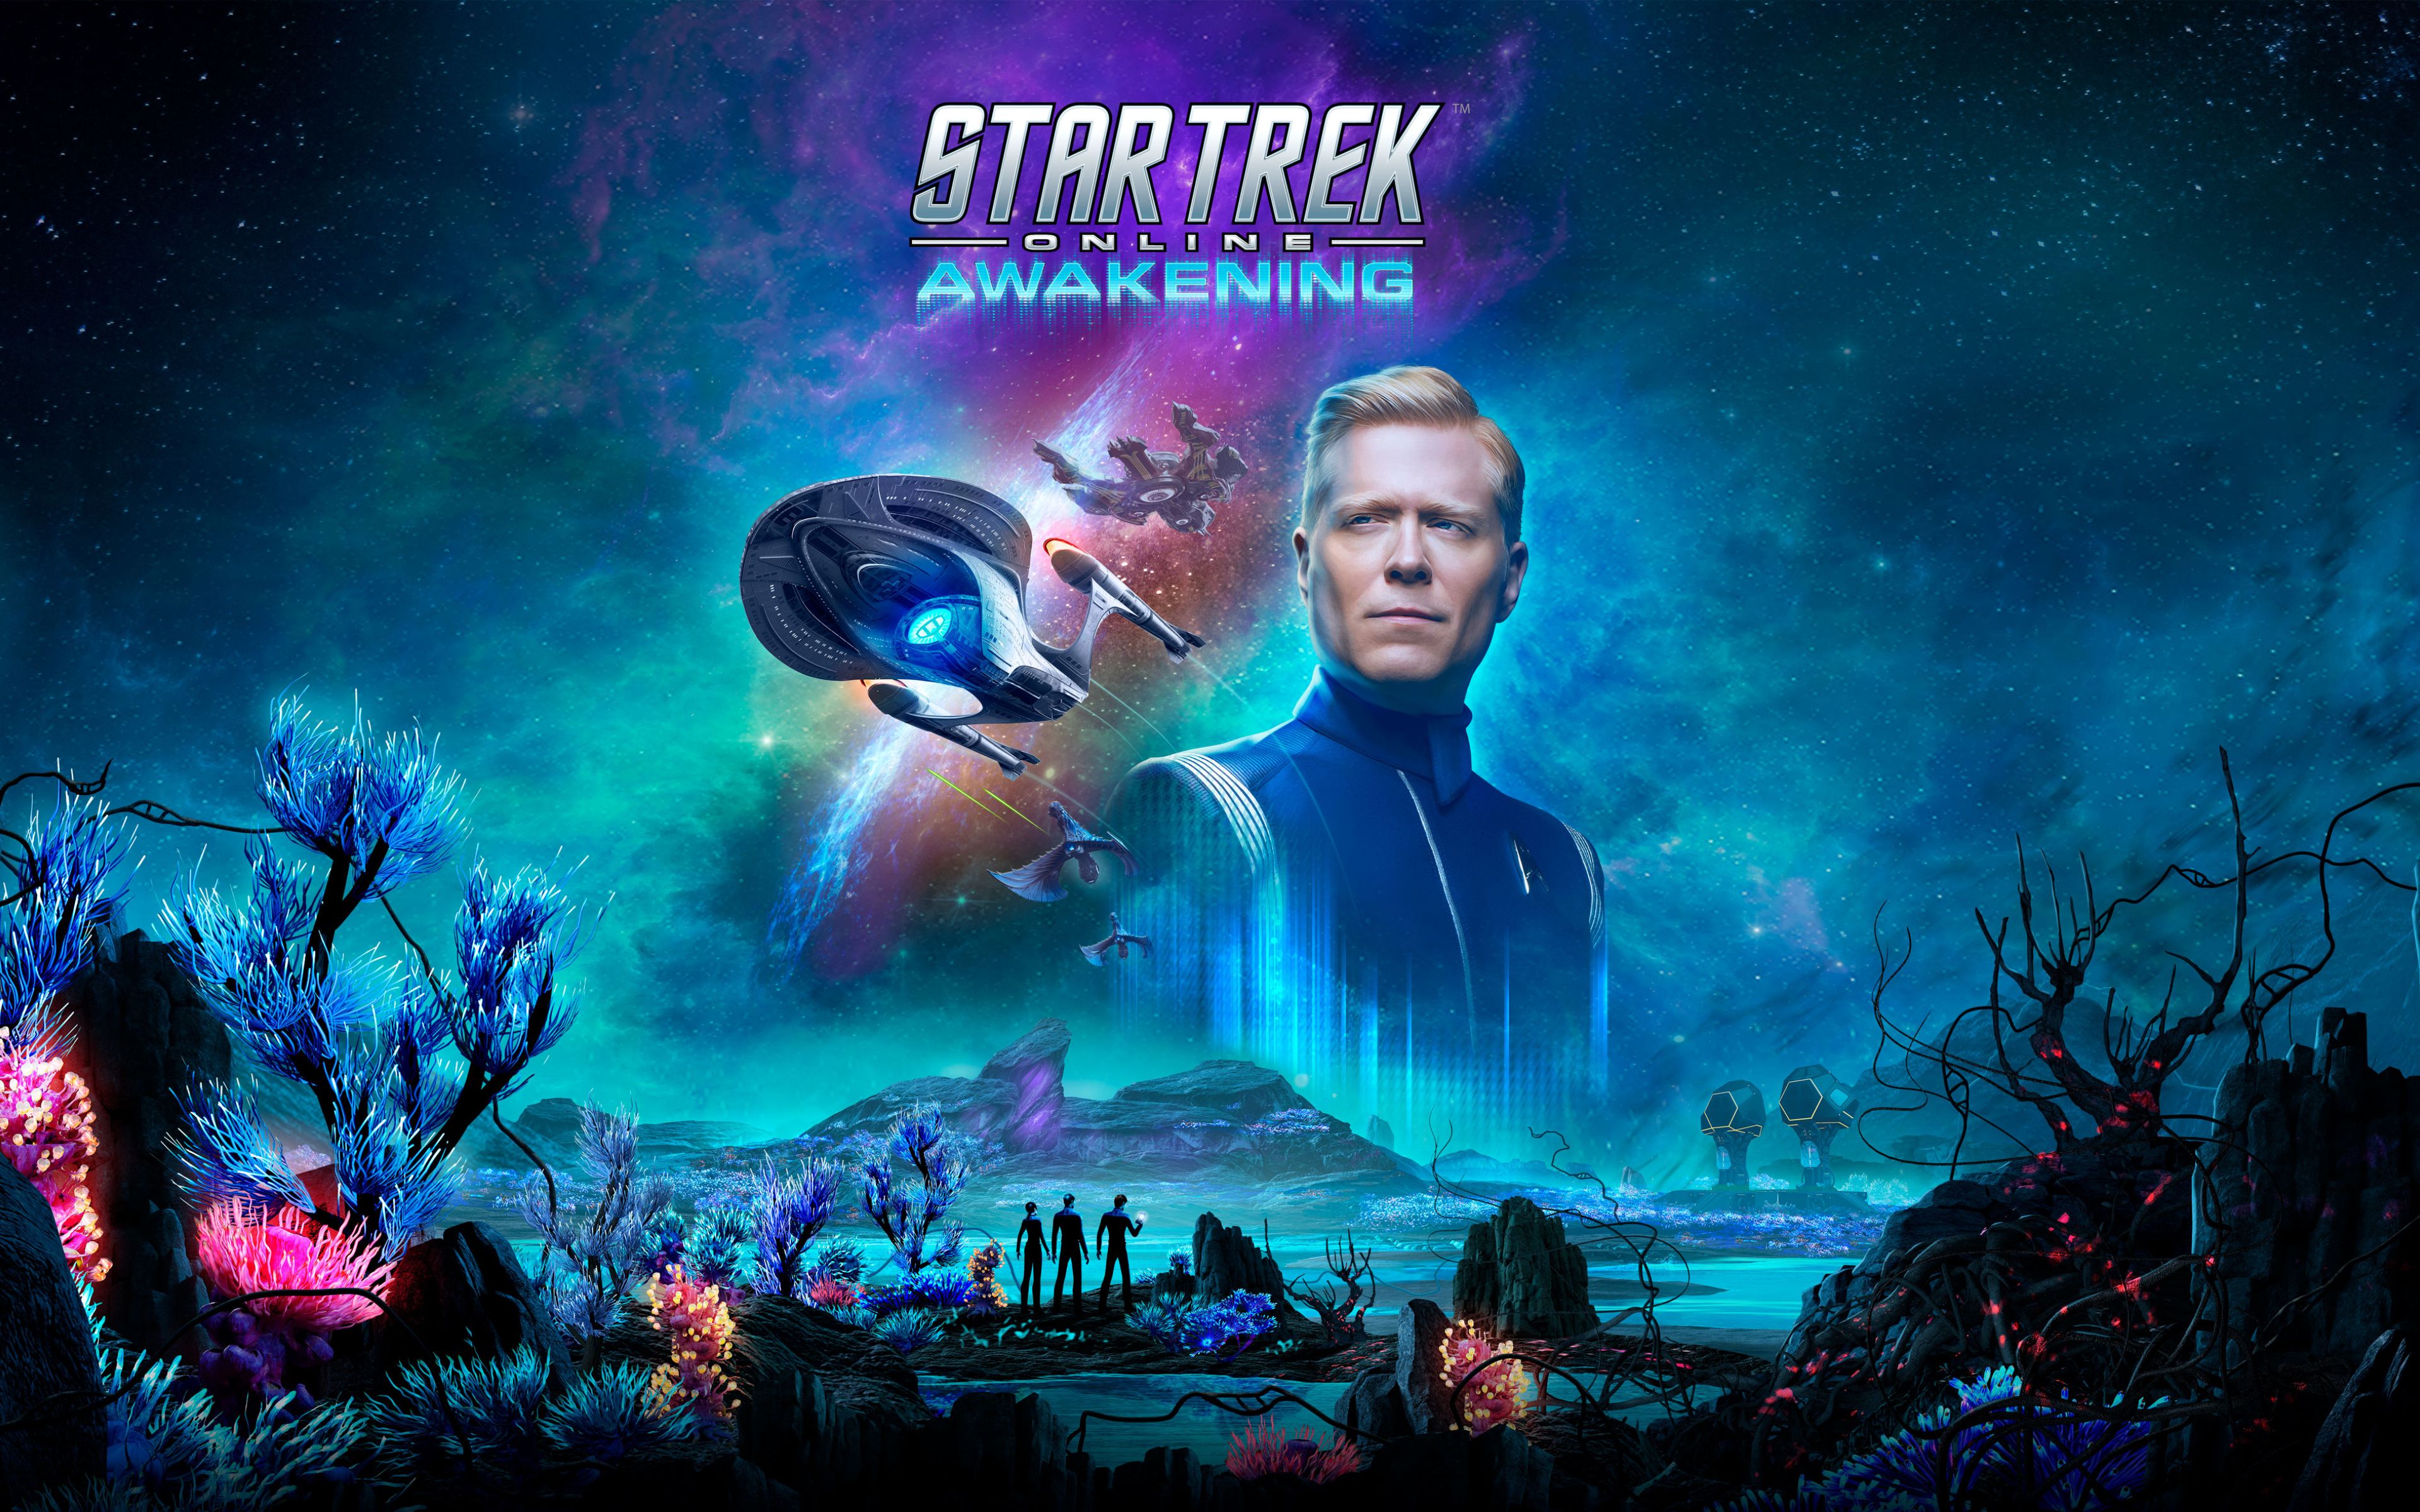 Star Trek Online 2019 4K 3840x2400 Resolution Wallpaper, HD Games 4K Wallpaper, Image, Photo and Background